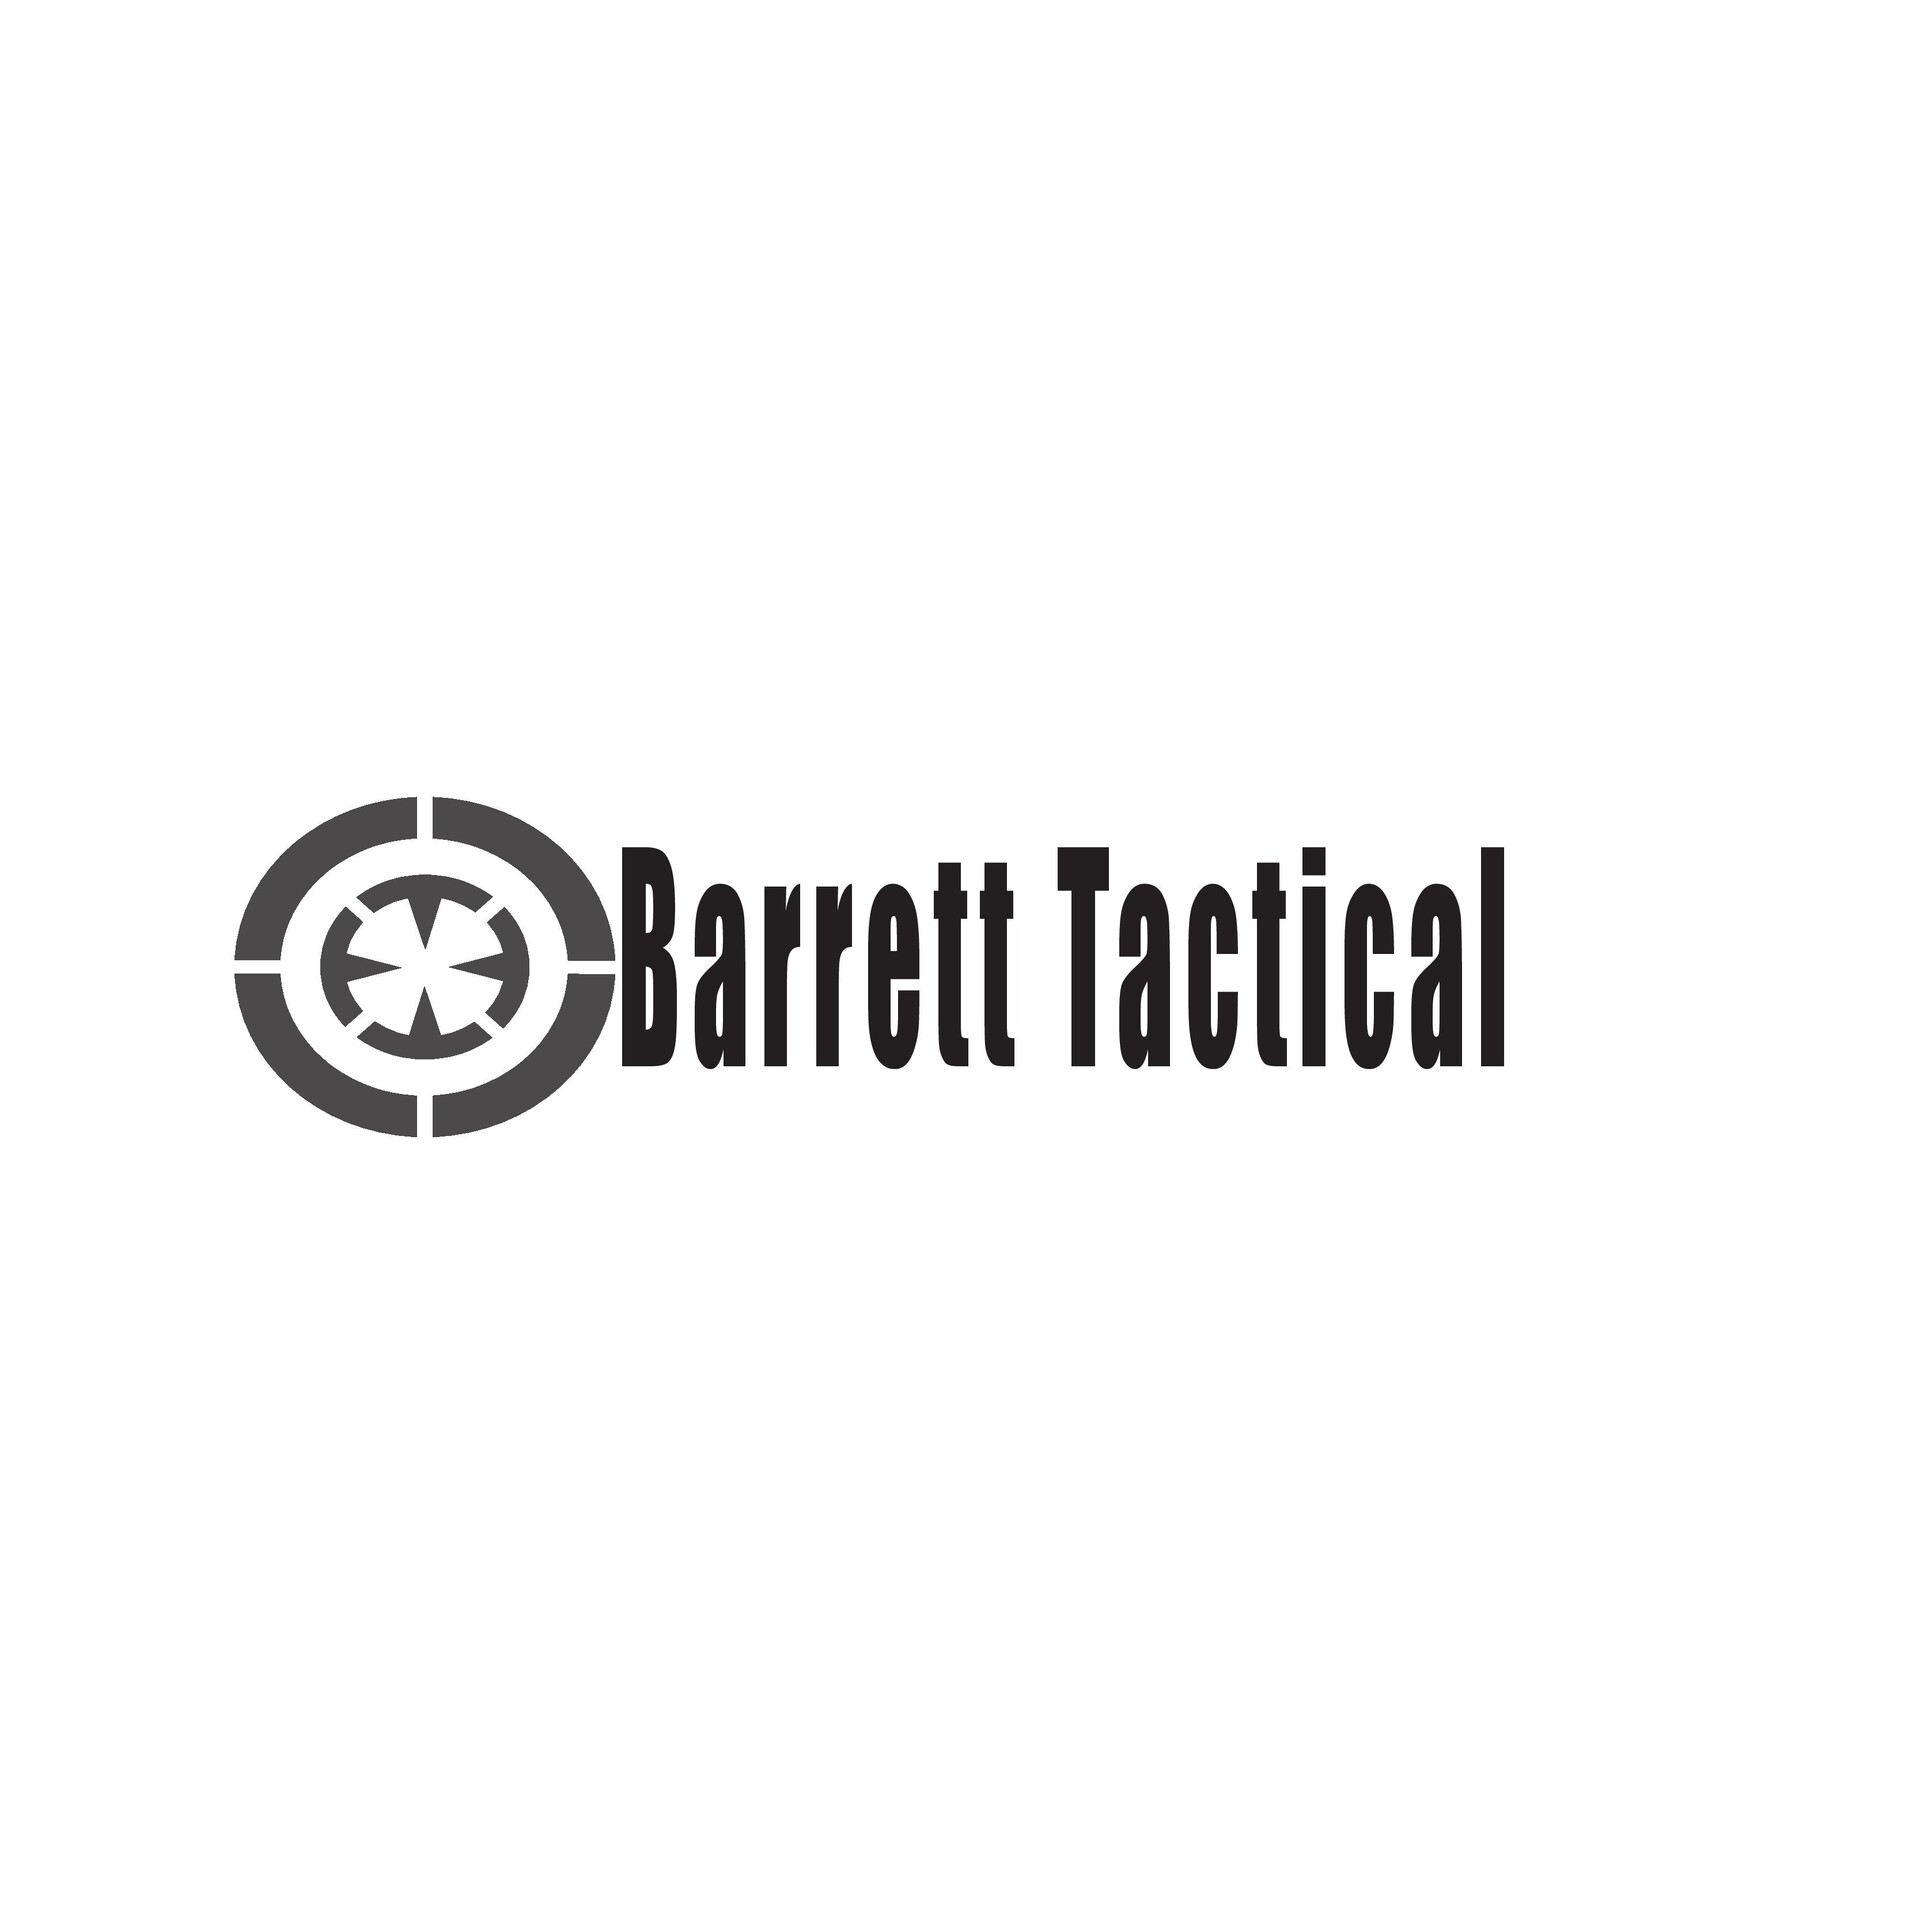 ArtStation - Barrett Tactical